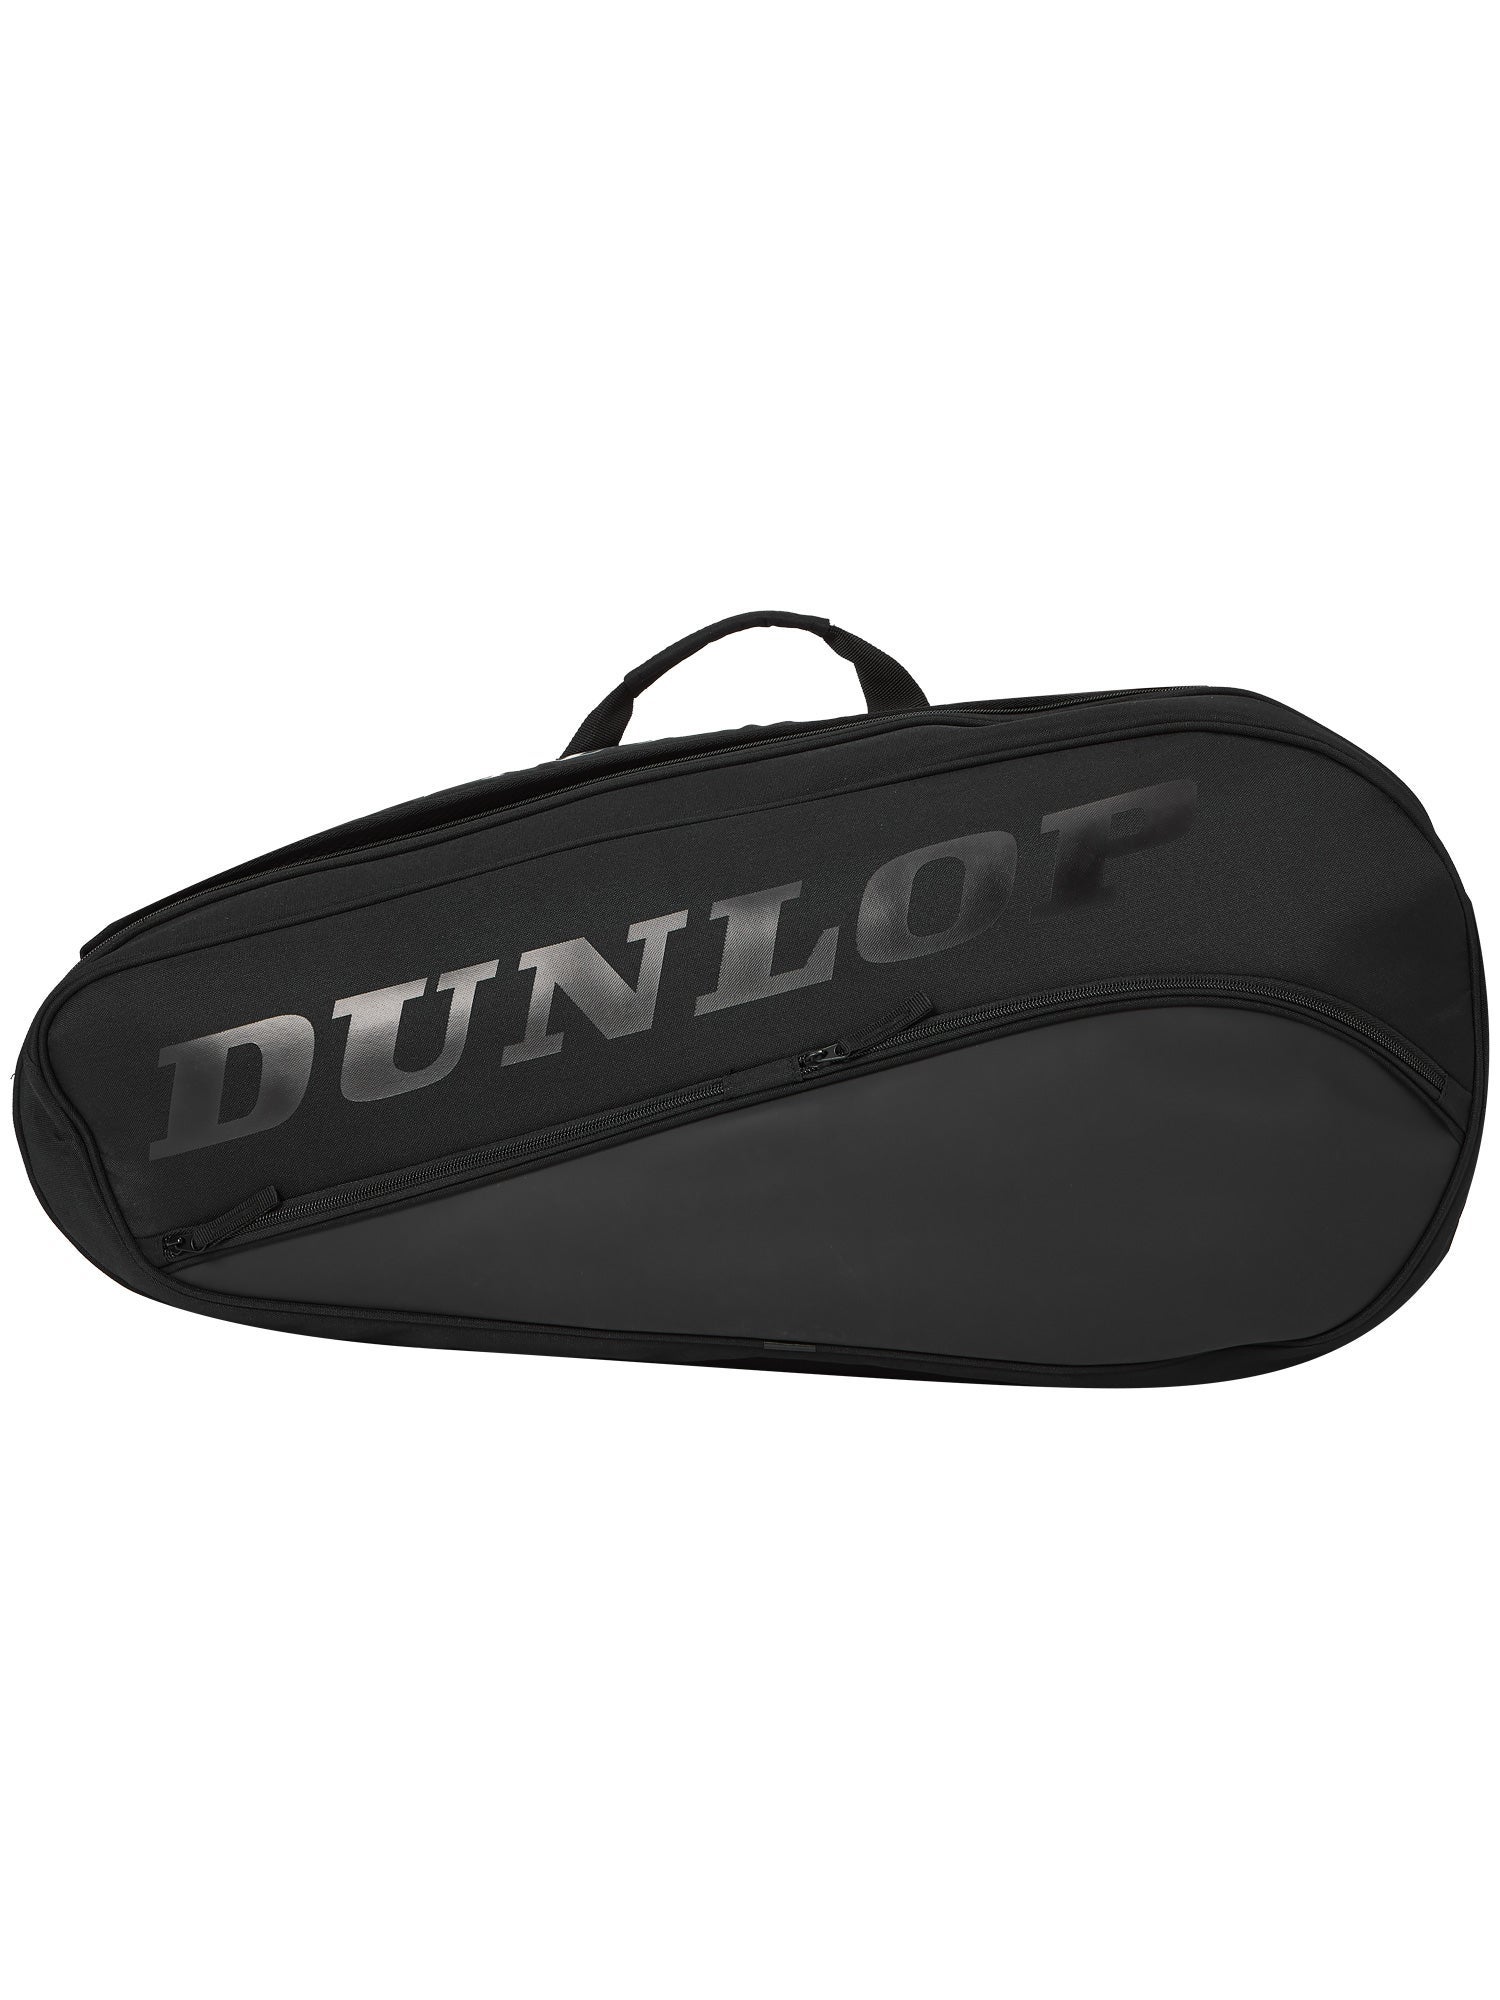 Dunlop Srixon 8 Pack Tennis Bag Blue Blue 